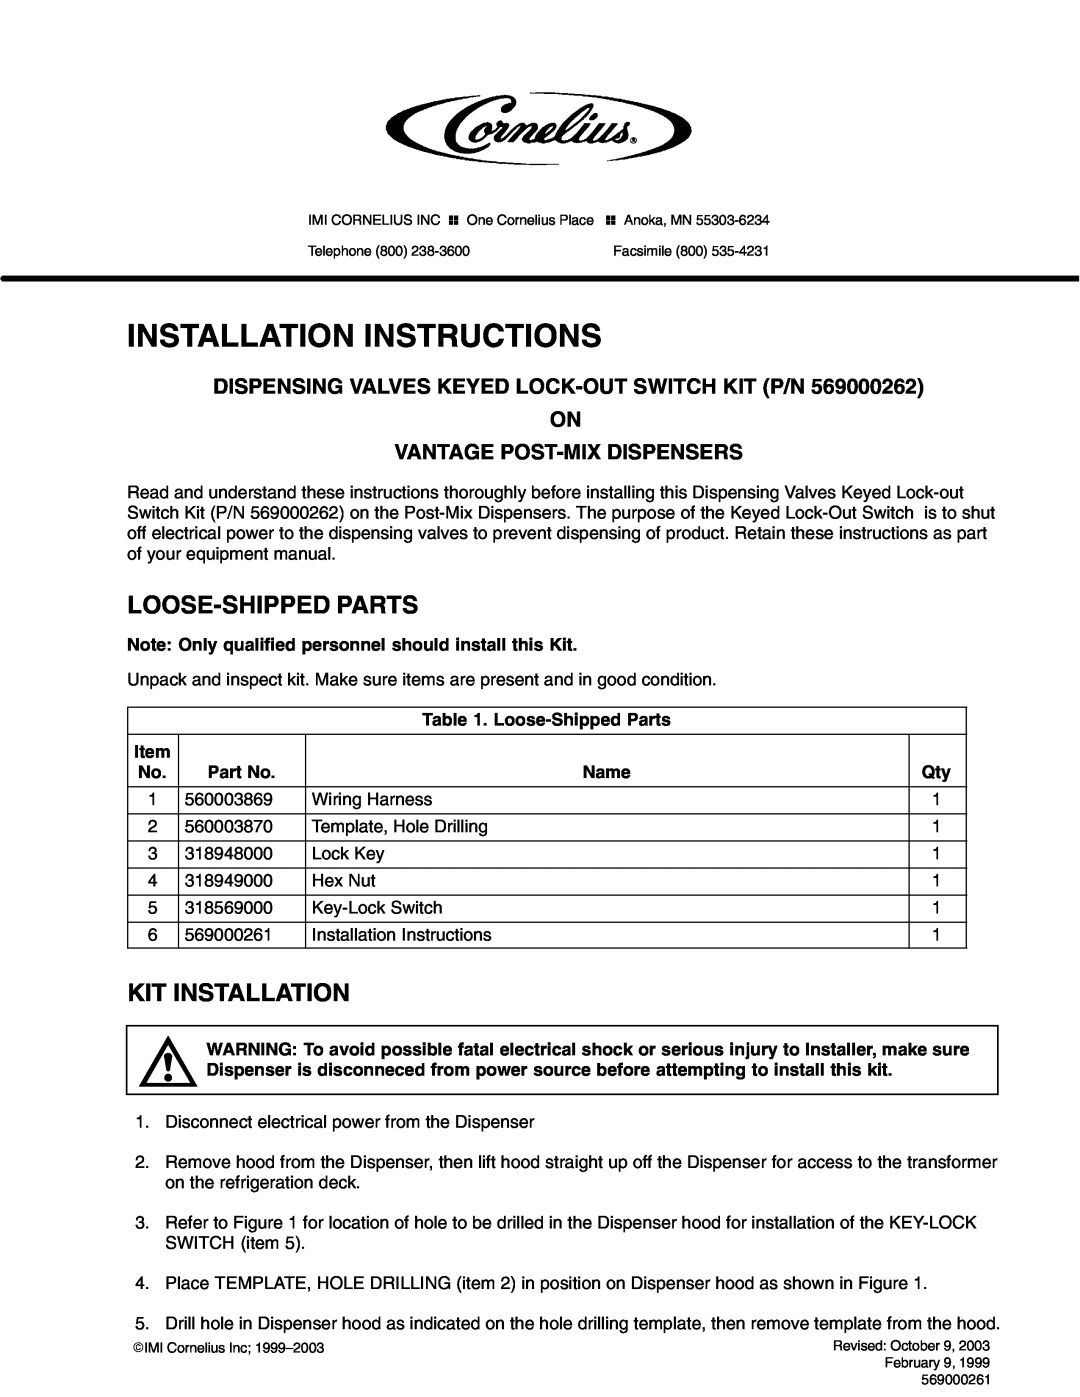 Cornelius 318949000 installation instructions Loose-ShippedParts, Name, Installation Instructions, Loose-Shippedparts 